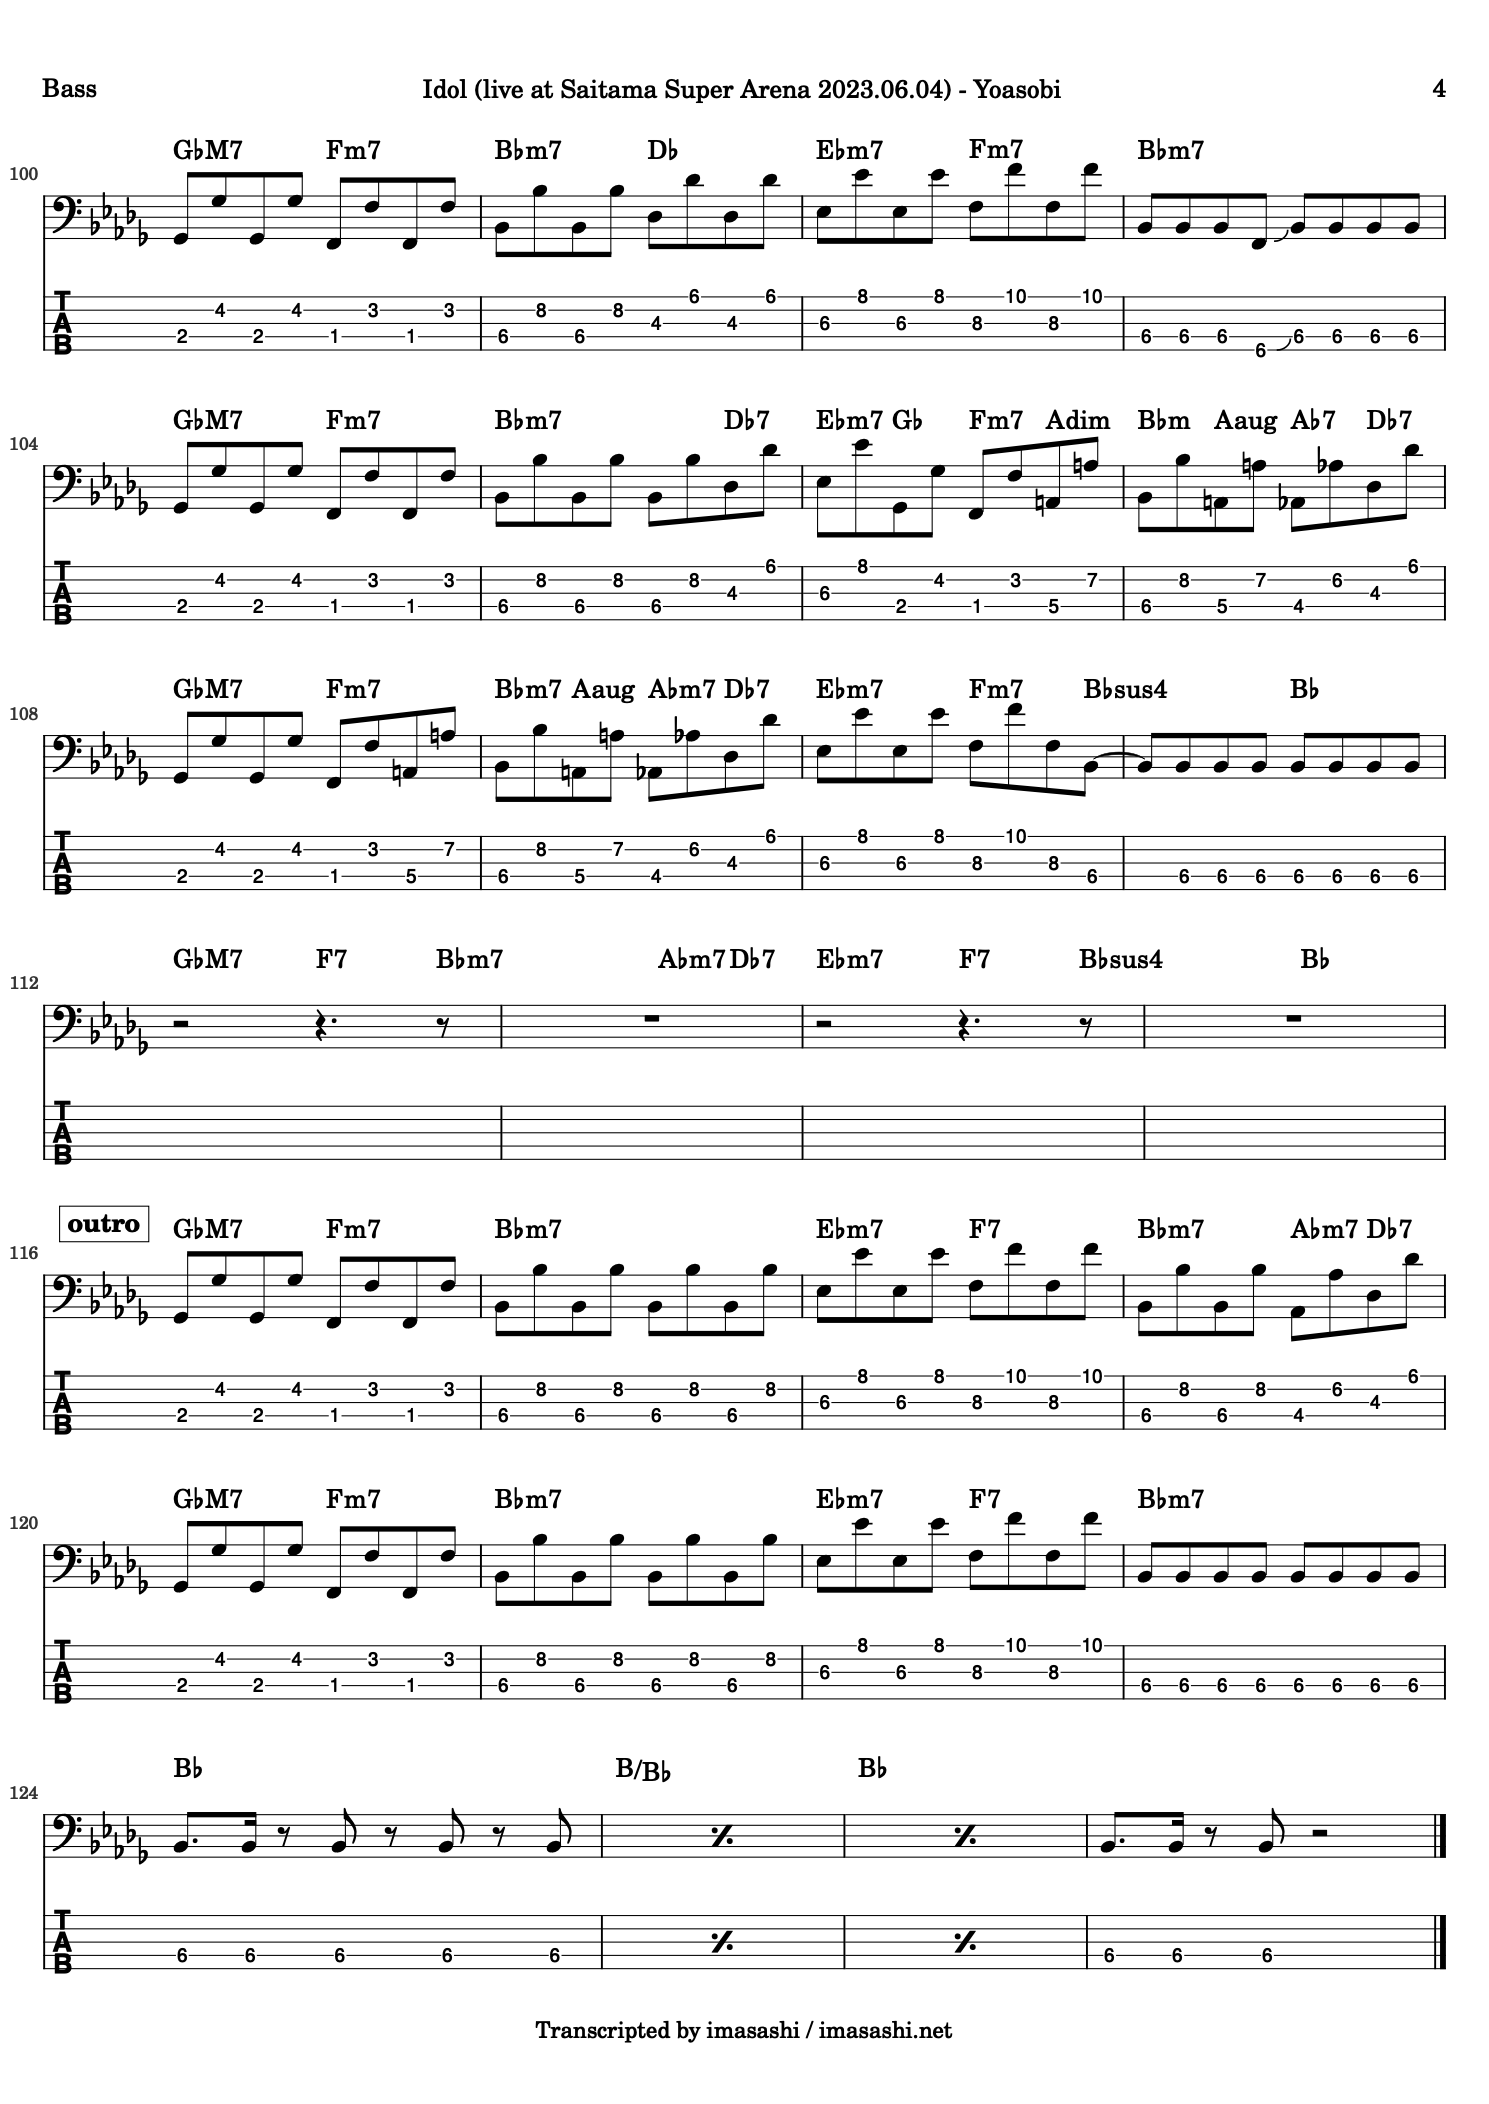 Bass tabs and chord progression of Yoasobi's 'Idol' - page 4